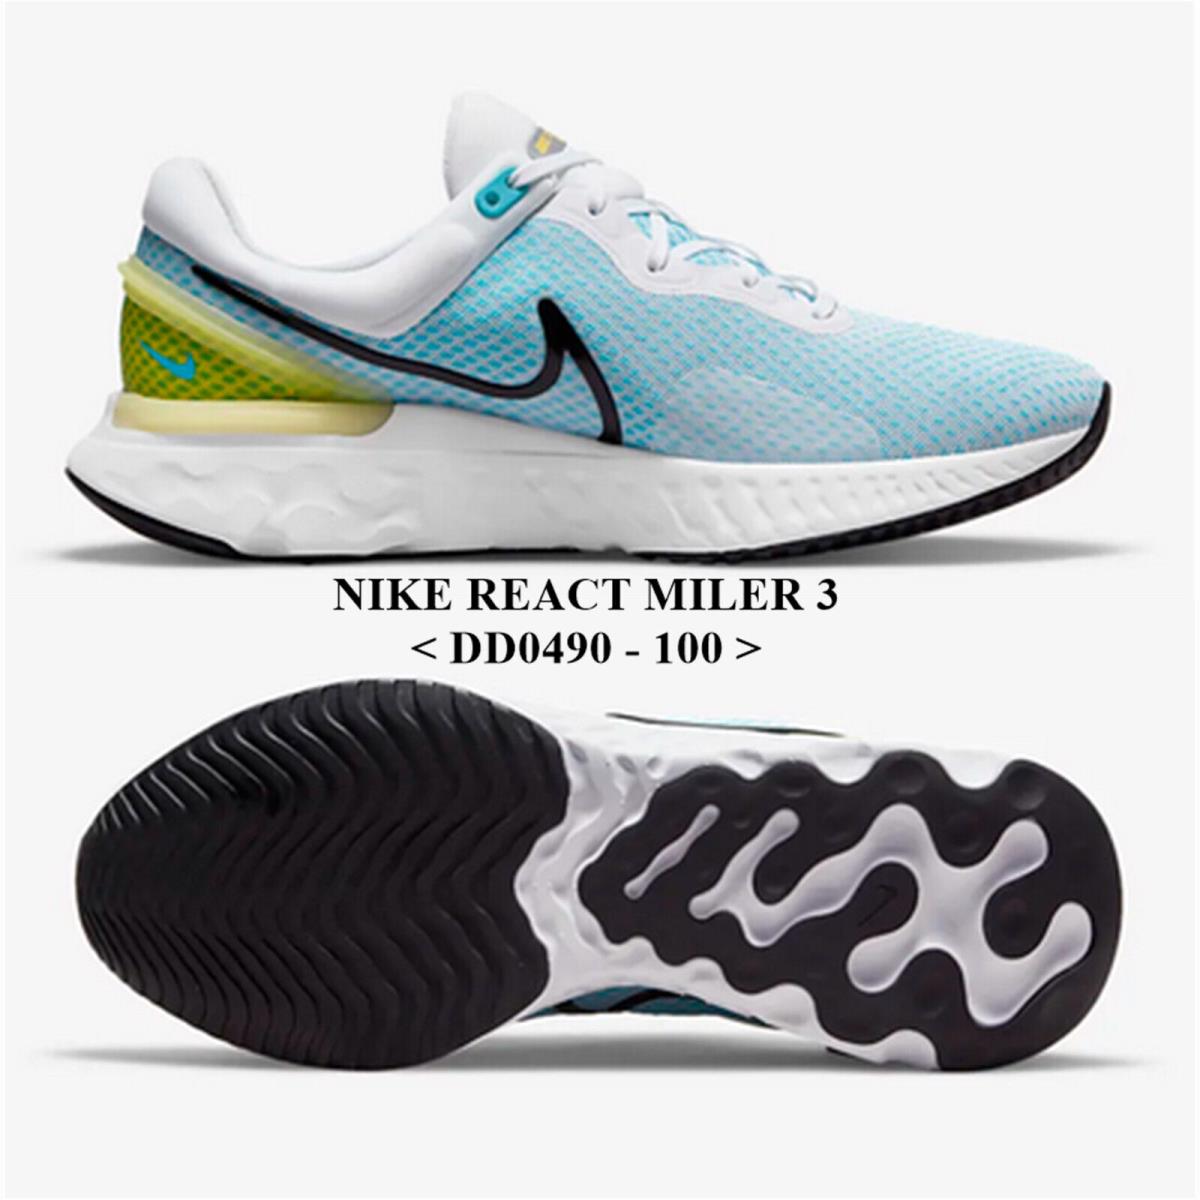 Nike React Miler 3 DD0490 - 100 Men`s Running Shoes. NO Lid